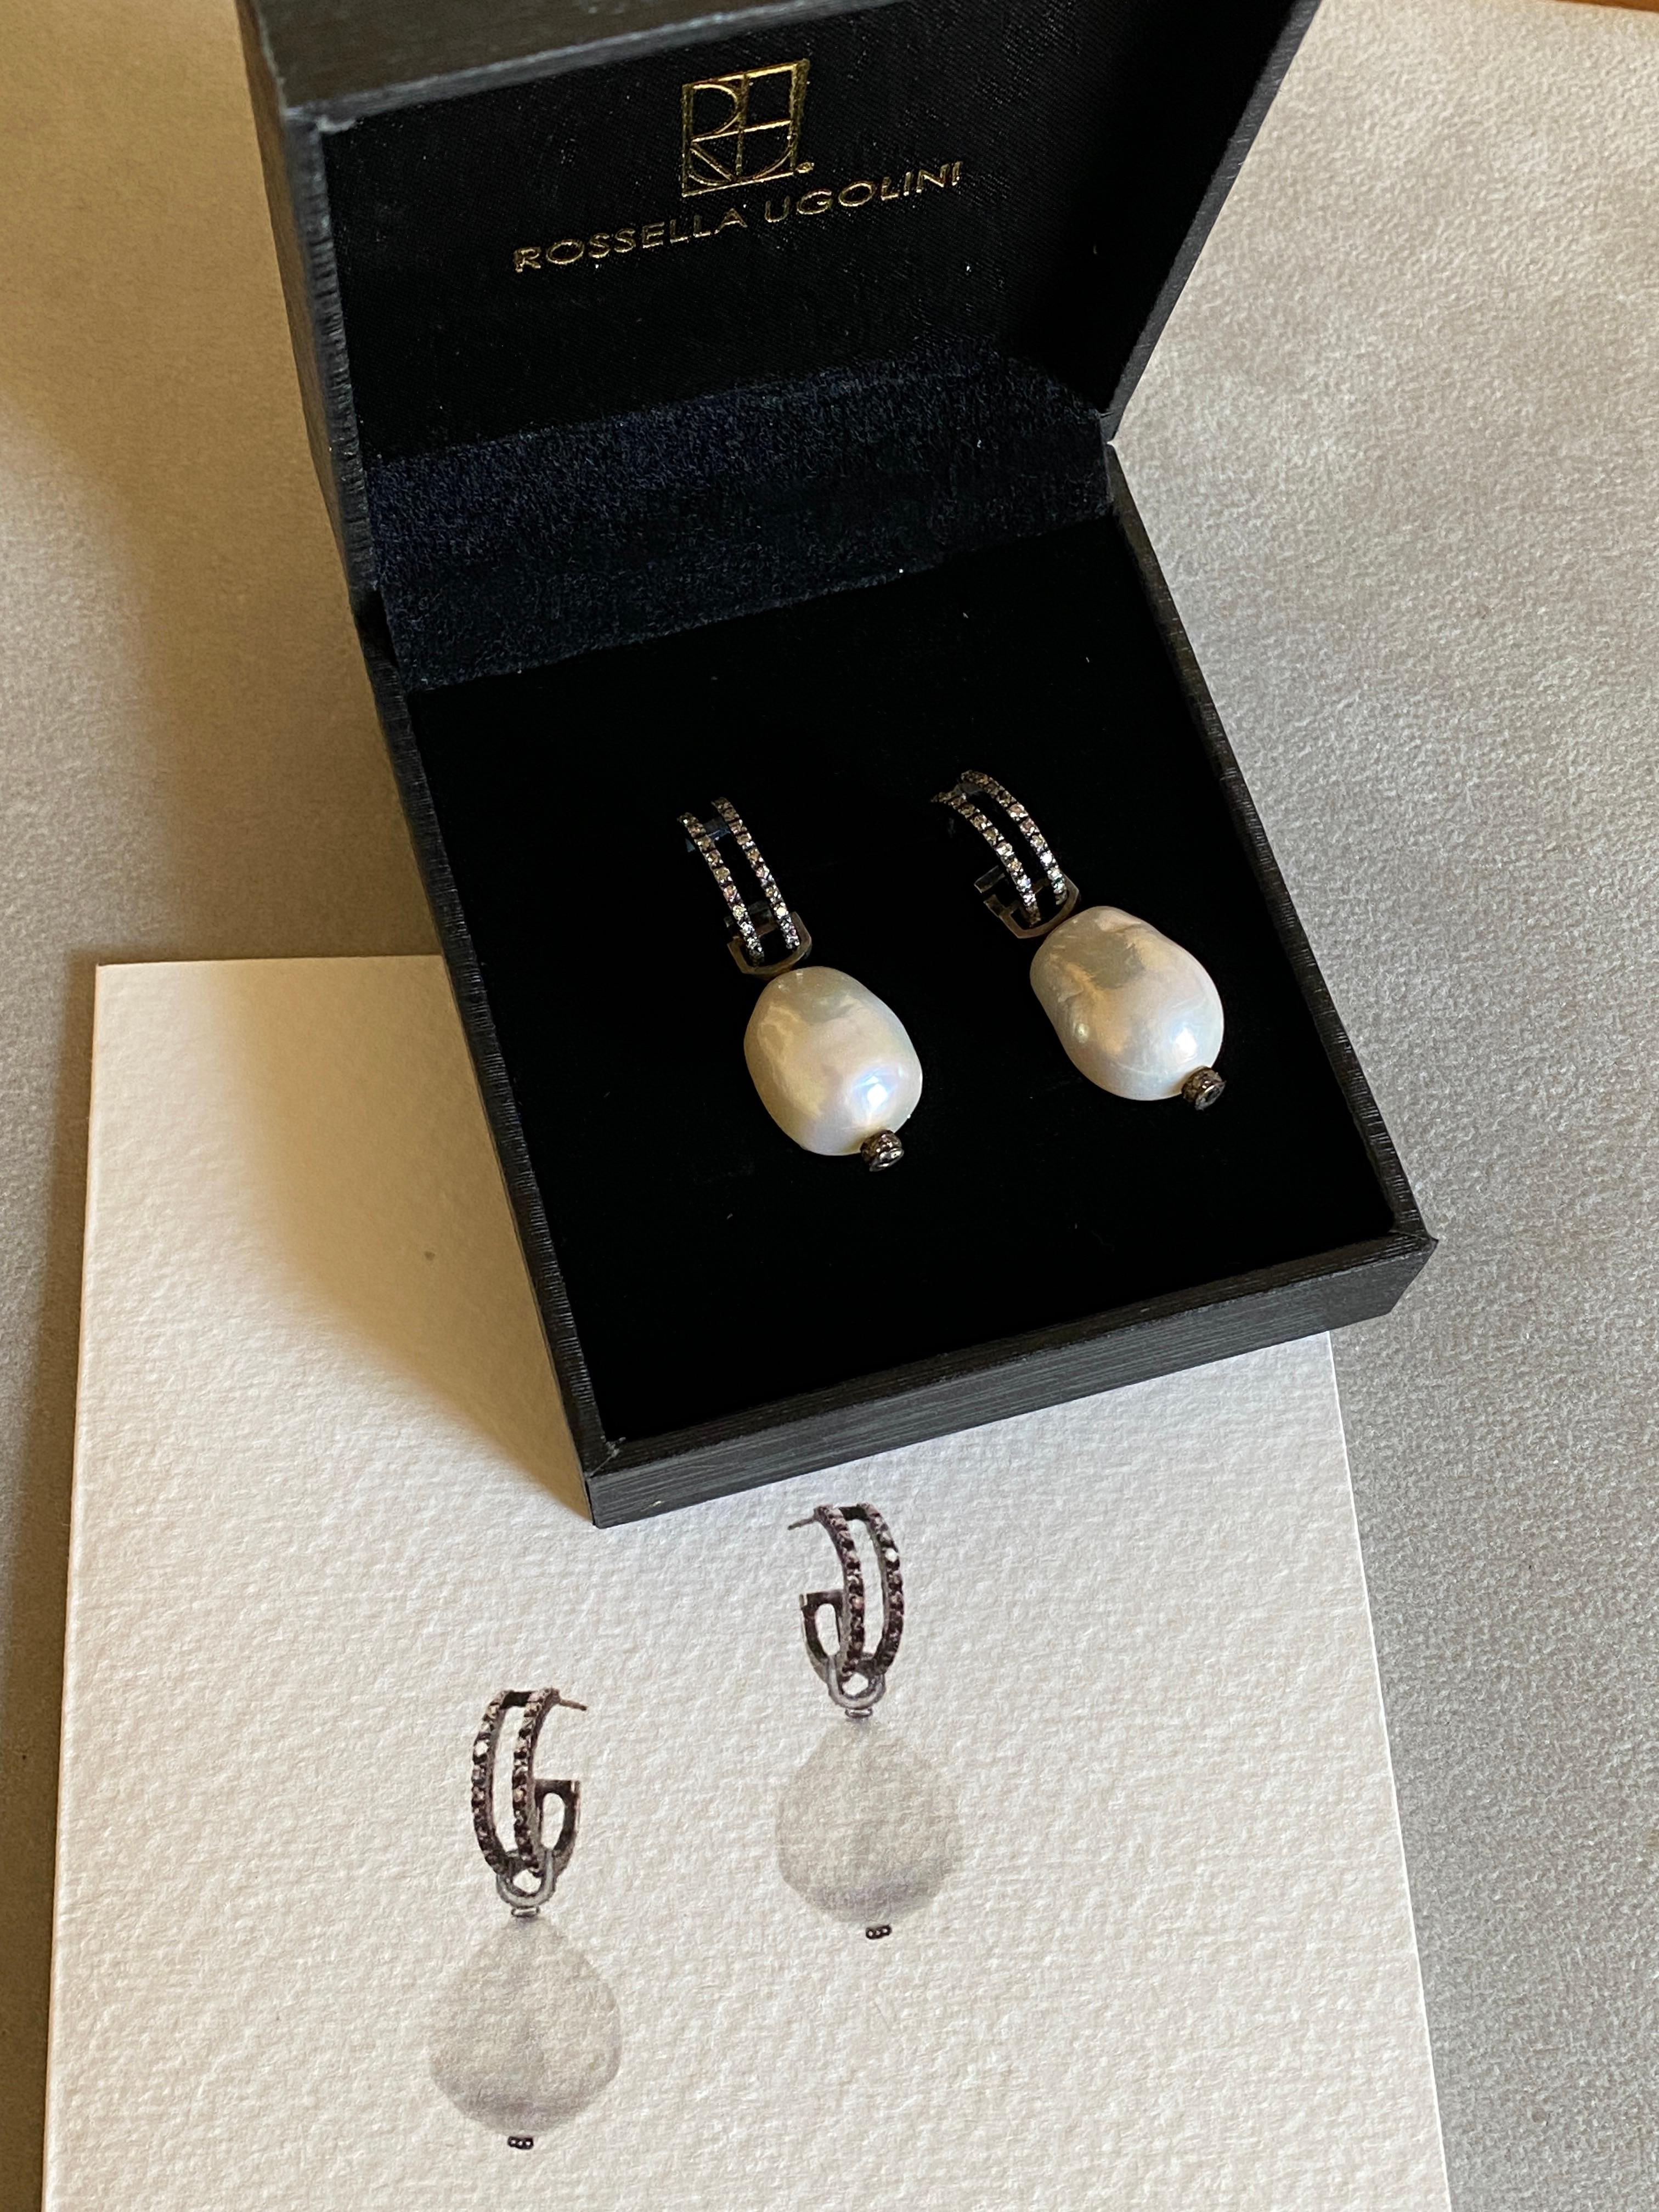 Rossella Ugolini Detachable White Diamonds Hoop Earrings For Sale 3